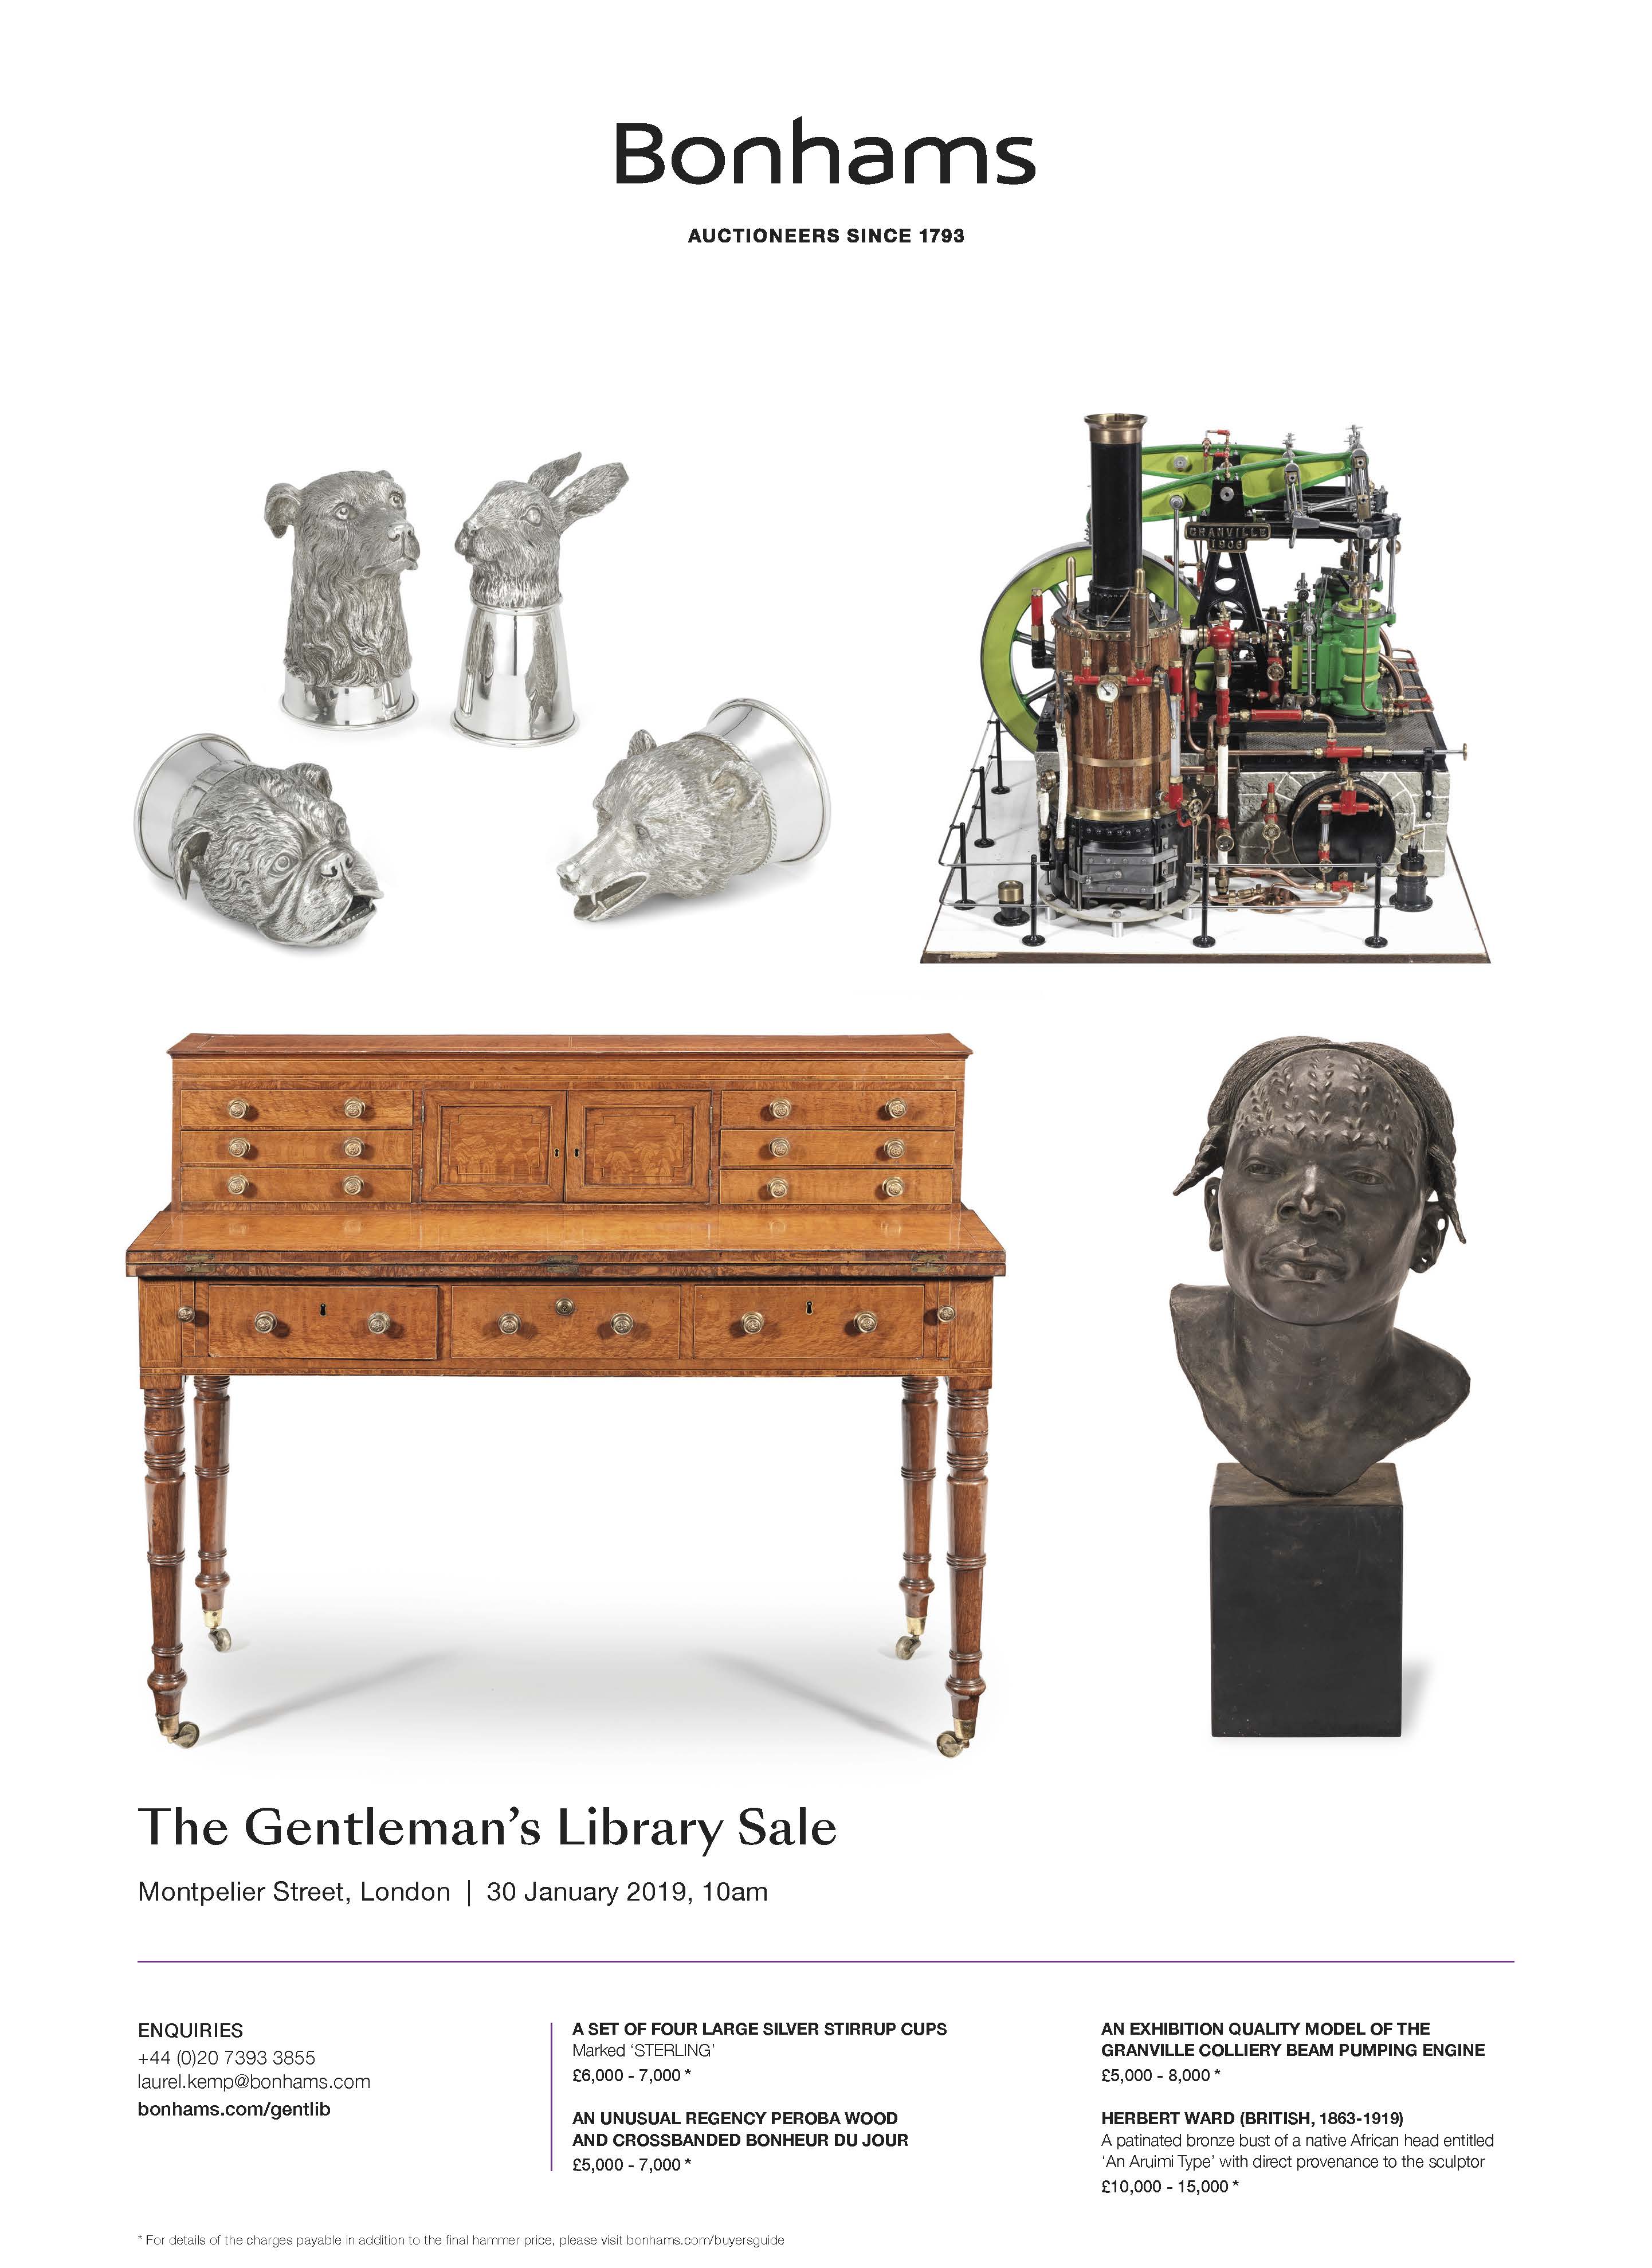 Bonhams - The Gentlemans's Library Sale.jpg